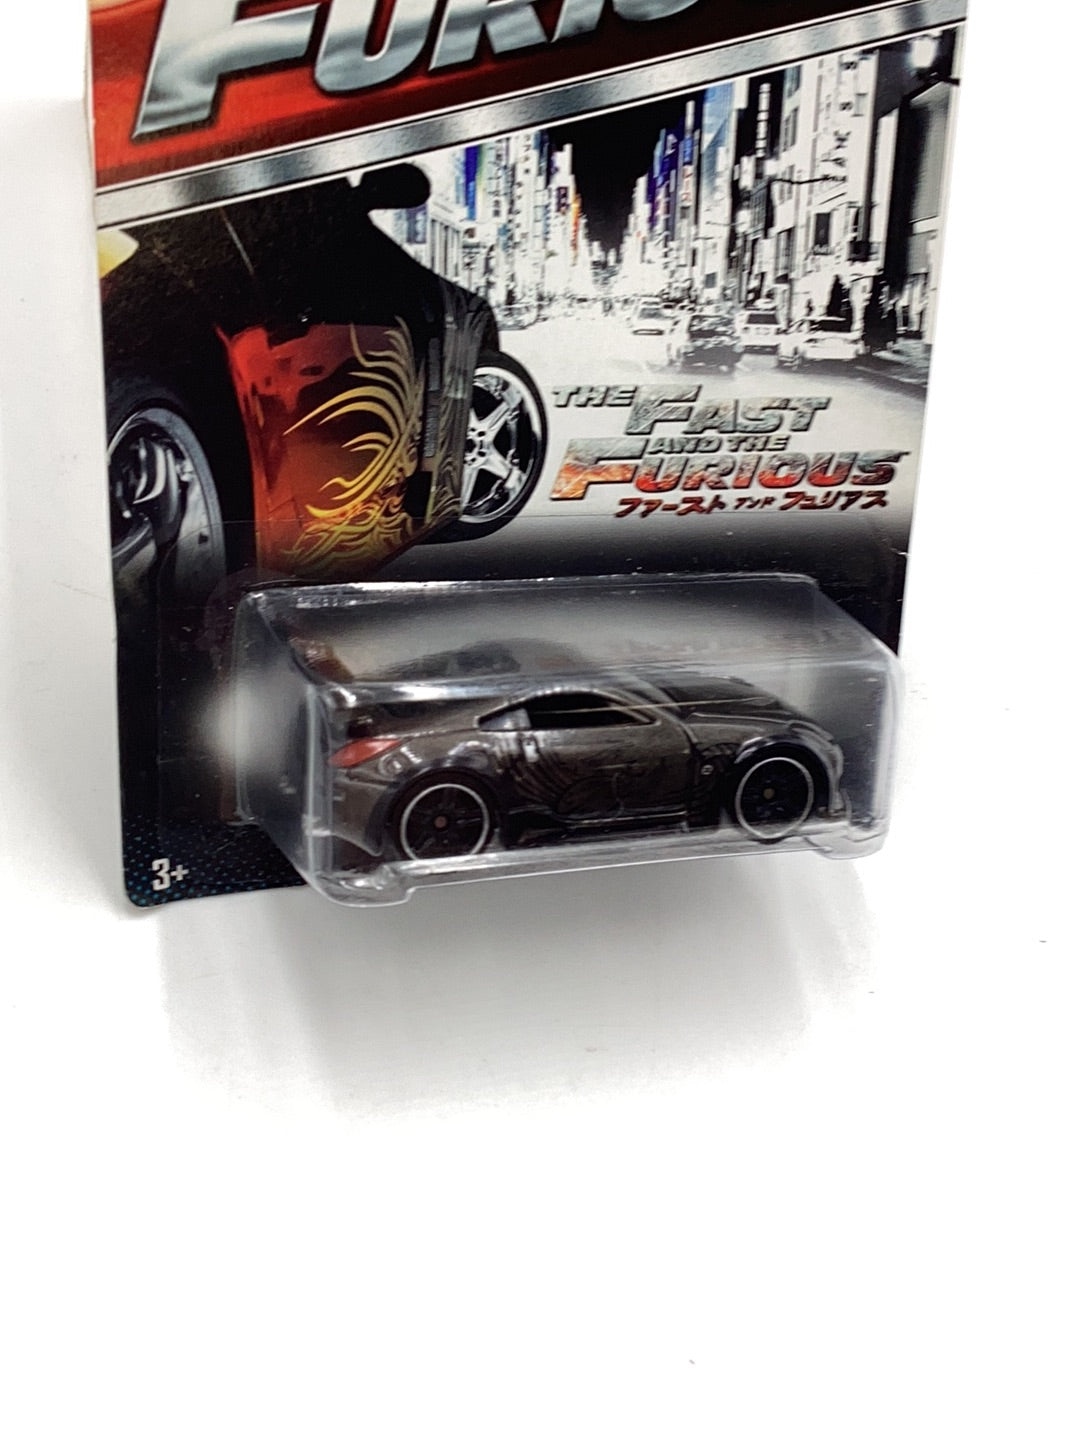 Hot Wheels Fast & Furious Nissan 350Z 5/8 #5